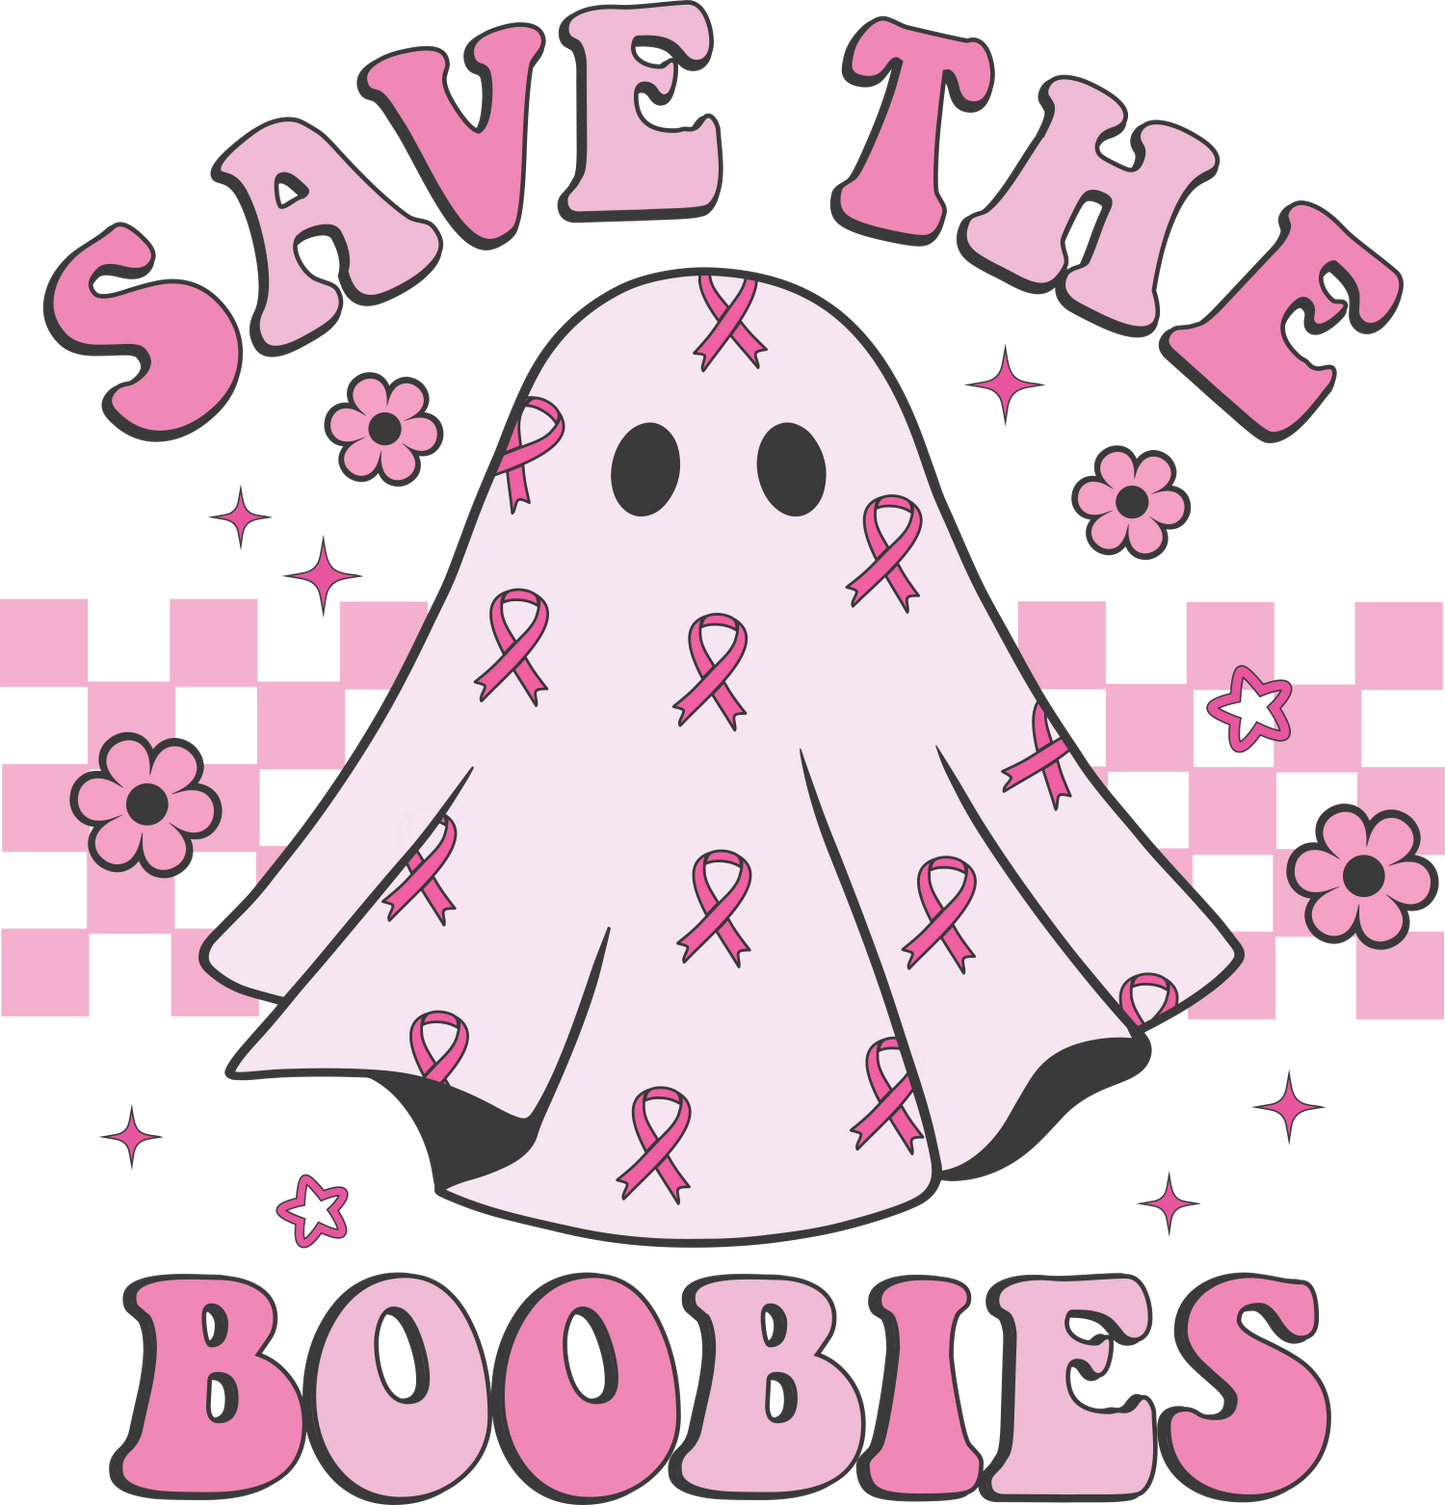 BREAST CANCER PRINT 14 - SaveTheBoobies-PNG